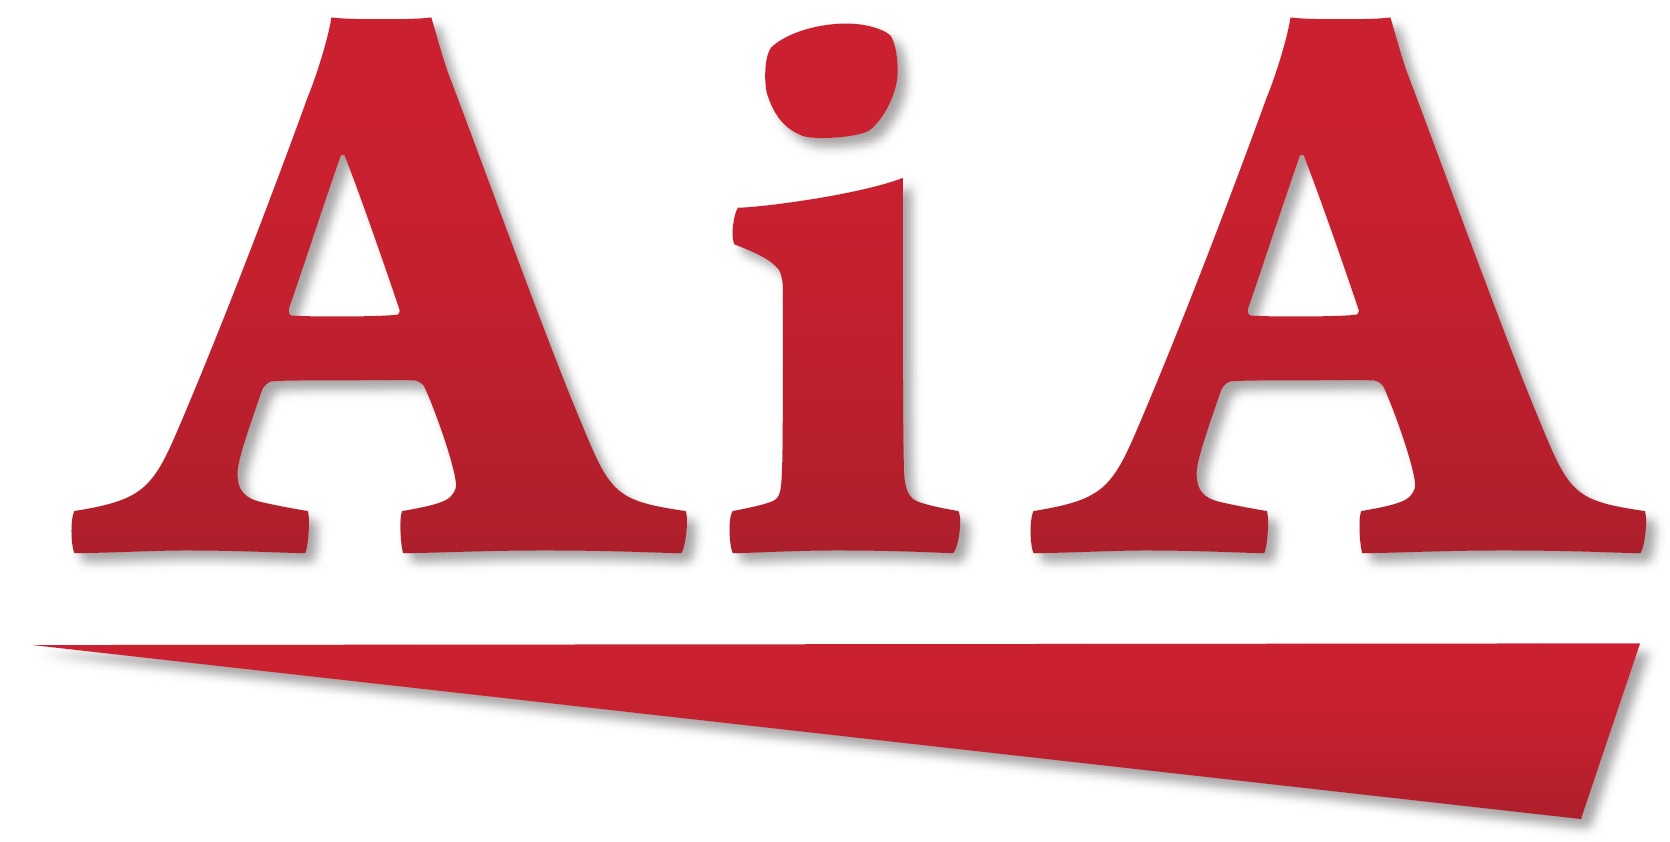 Associated Insurance Administrators, Inc. logo